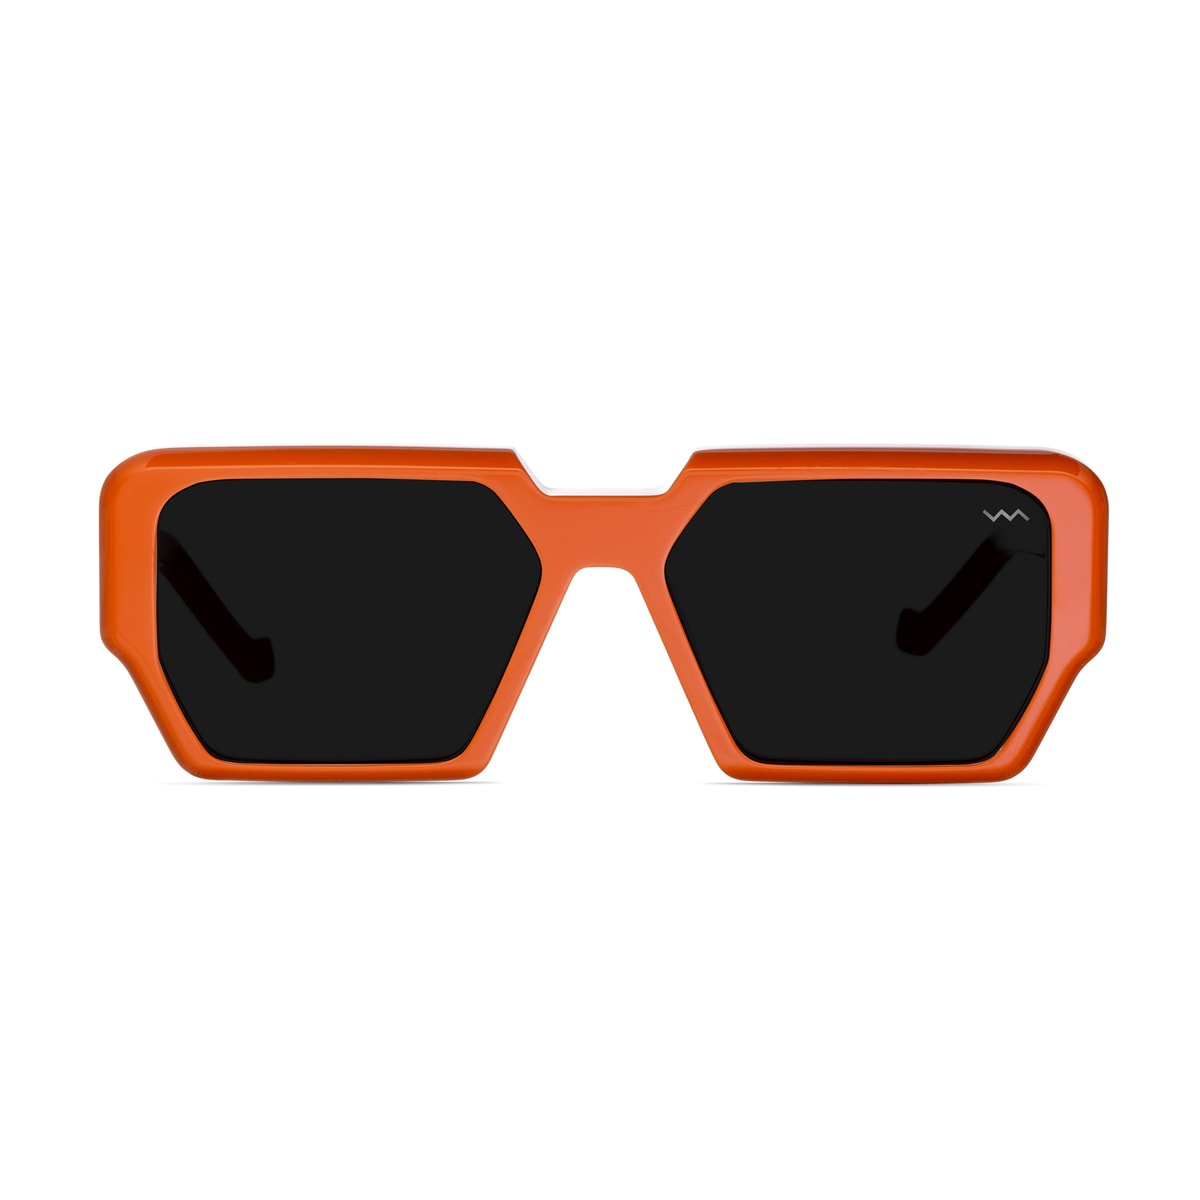 Wl0065 White Label Orange Sunglasses